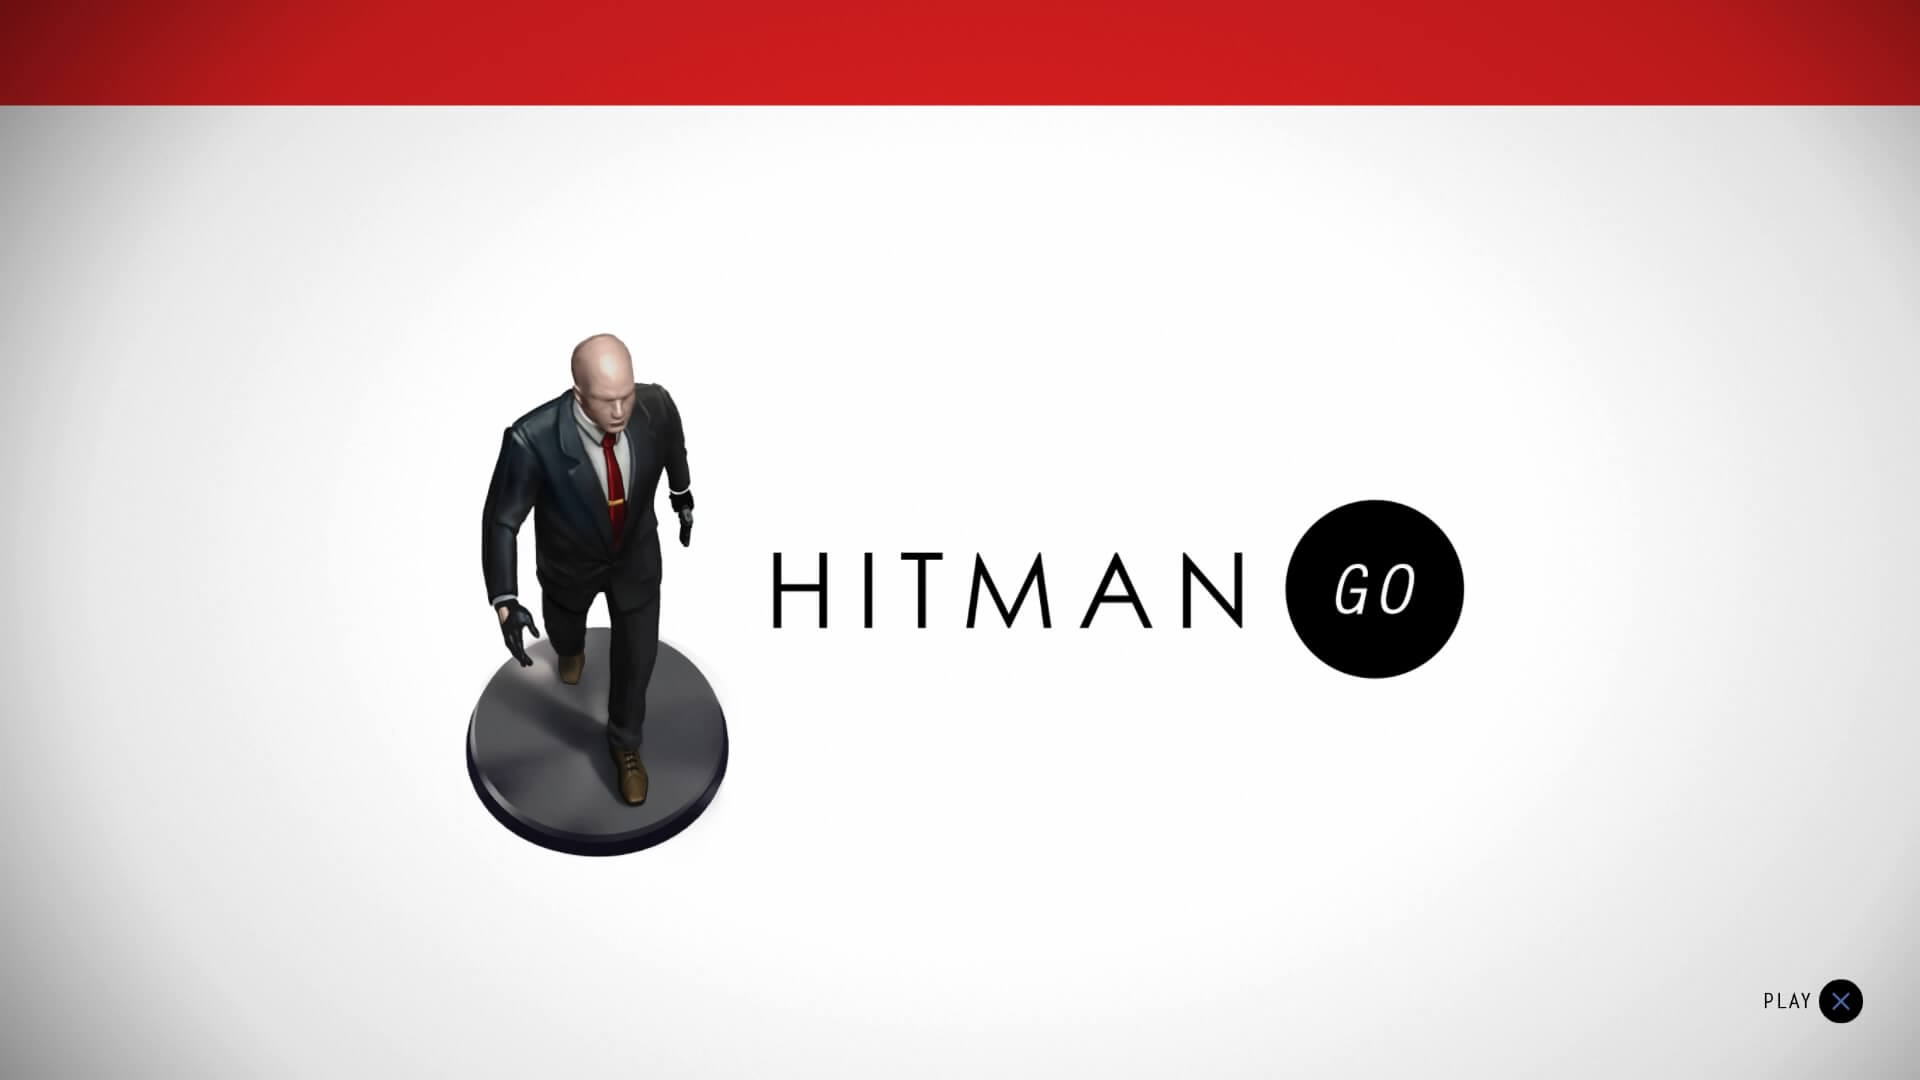 Hitman GO: D E